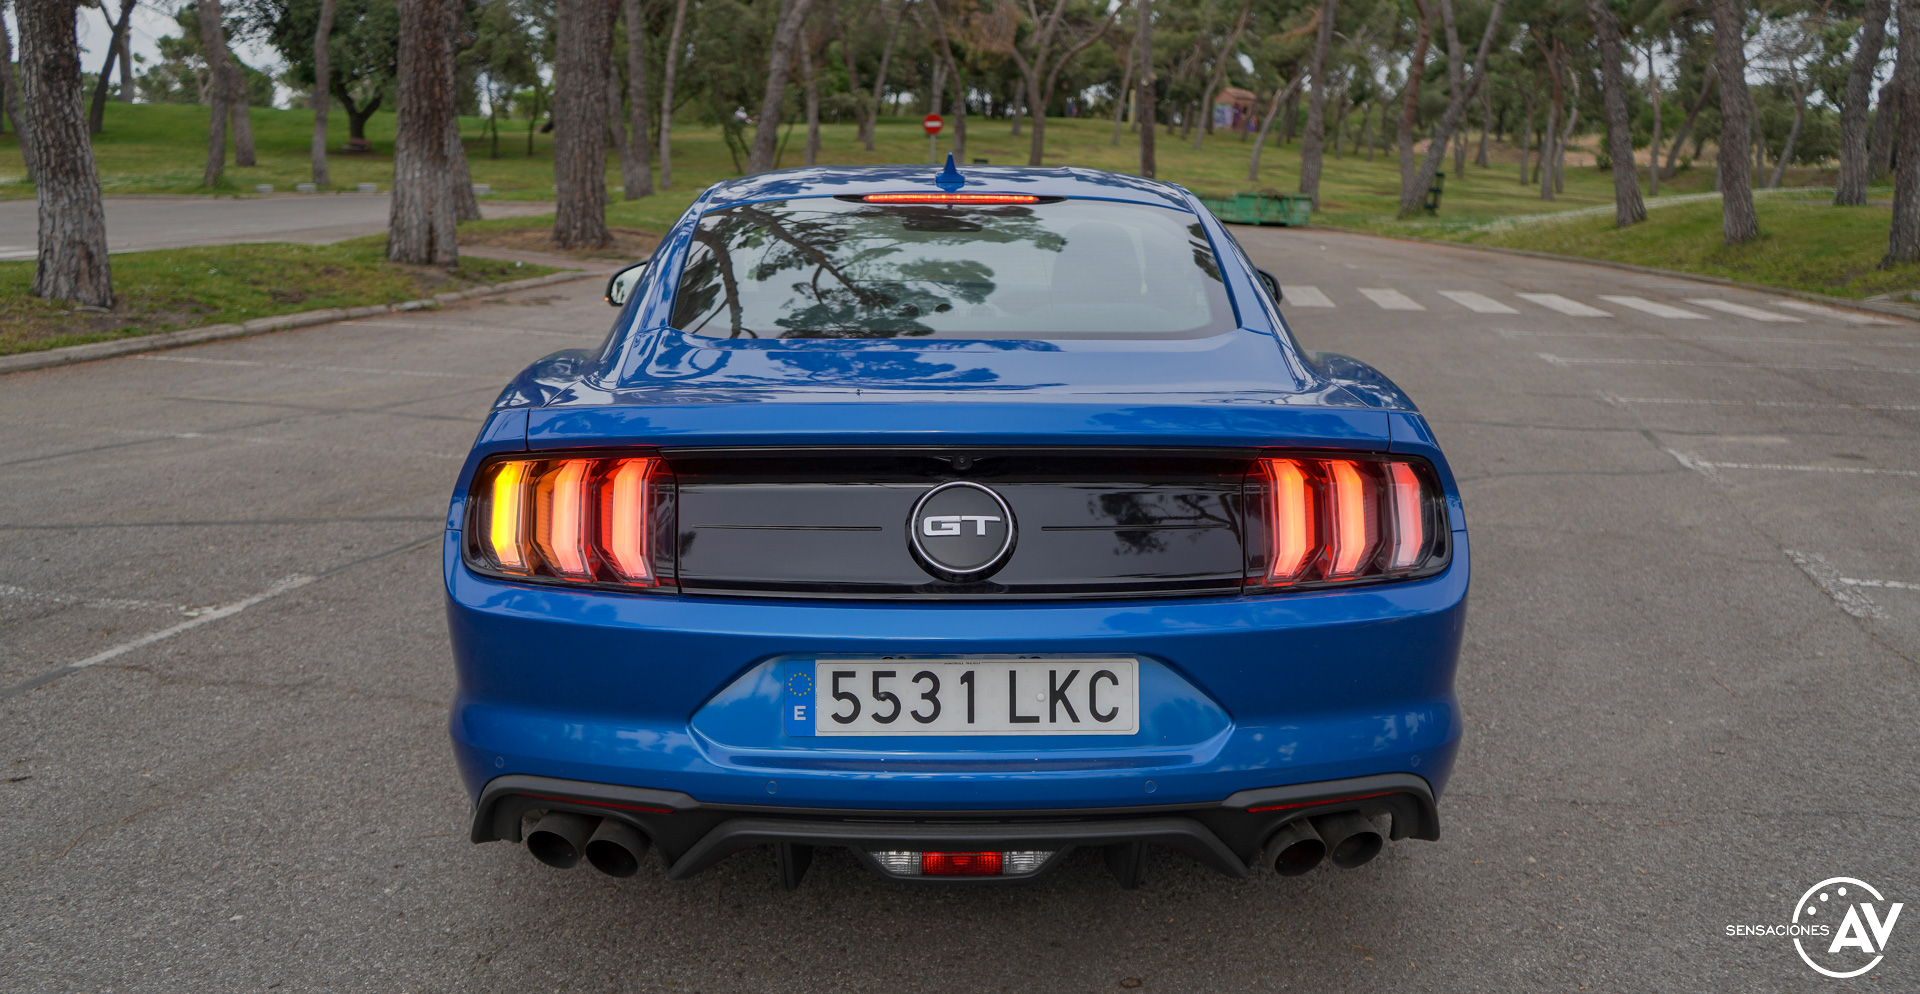 Trasera con luces Ford Mustang - Prueba Ford Mustang GT Fastback 2021: Puro músculo. ¡Que Dios bendiga a América!